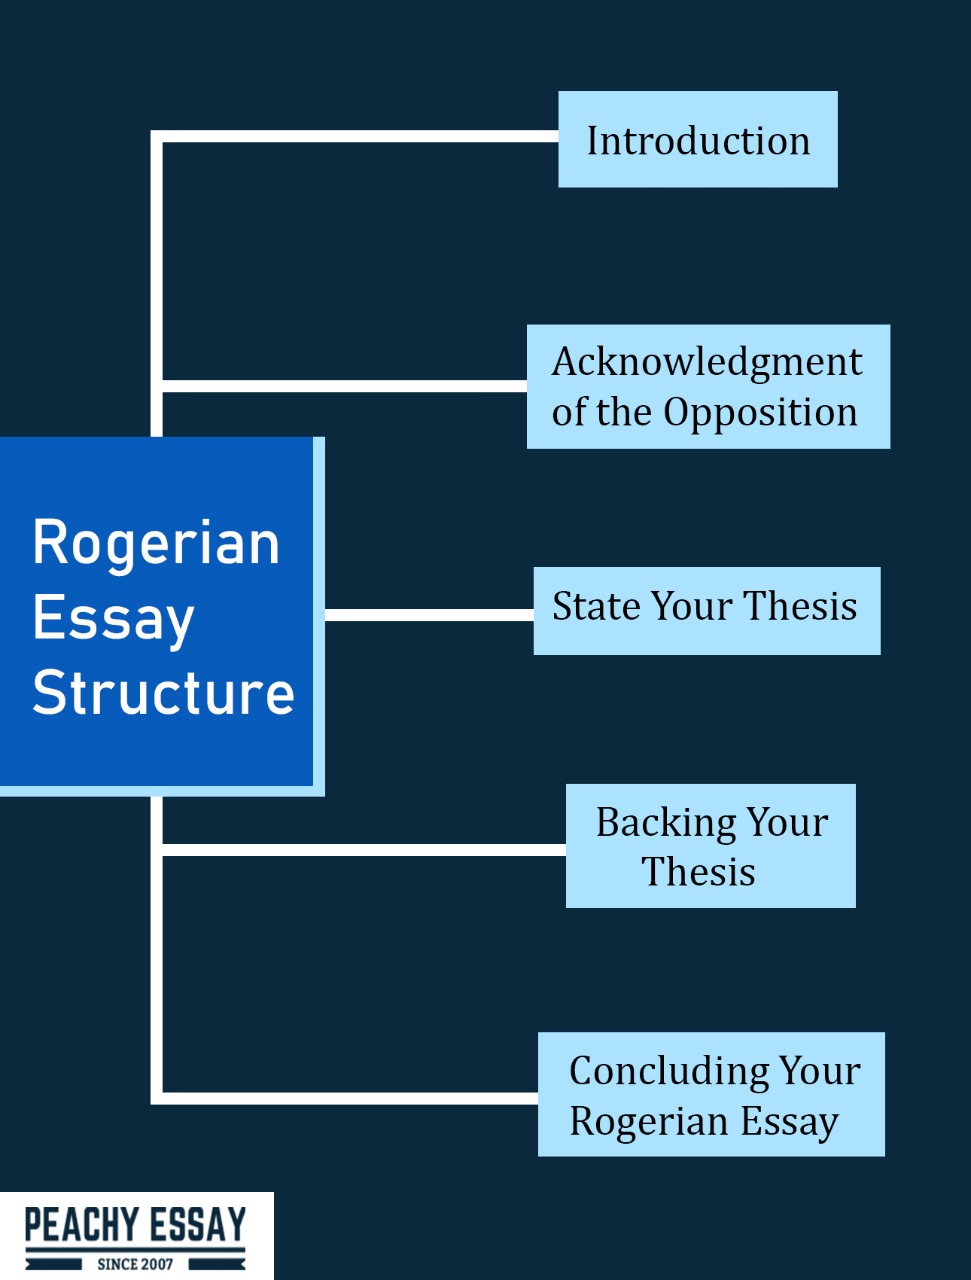 best topics for rogerian essay